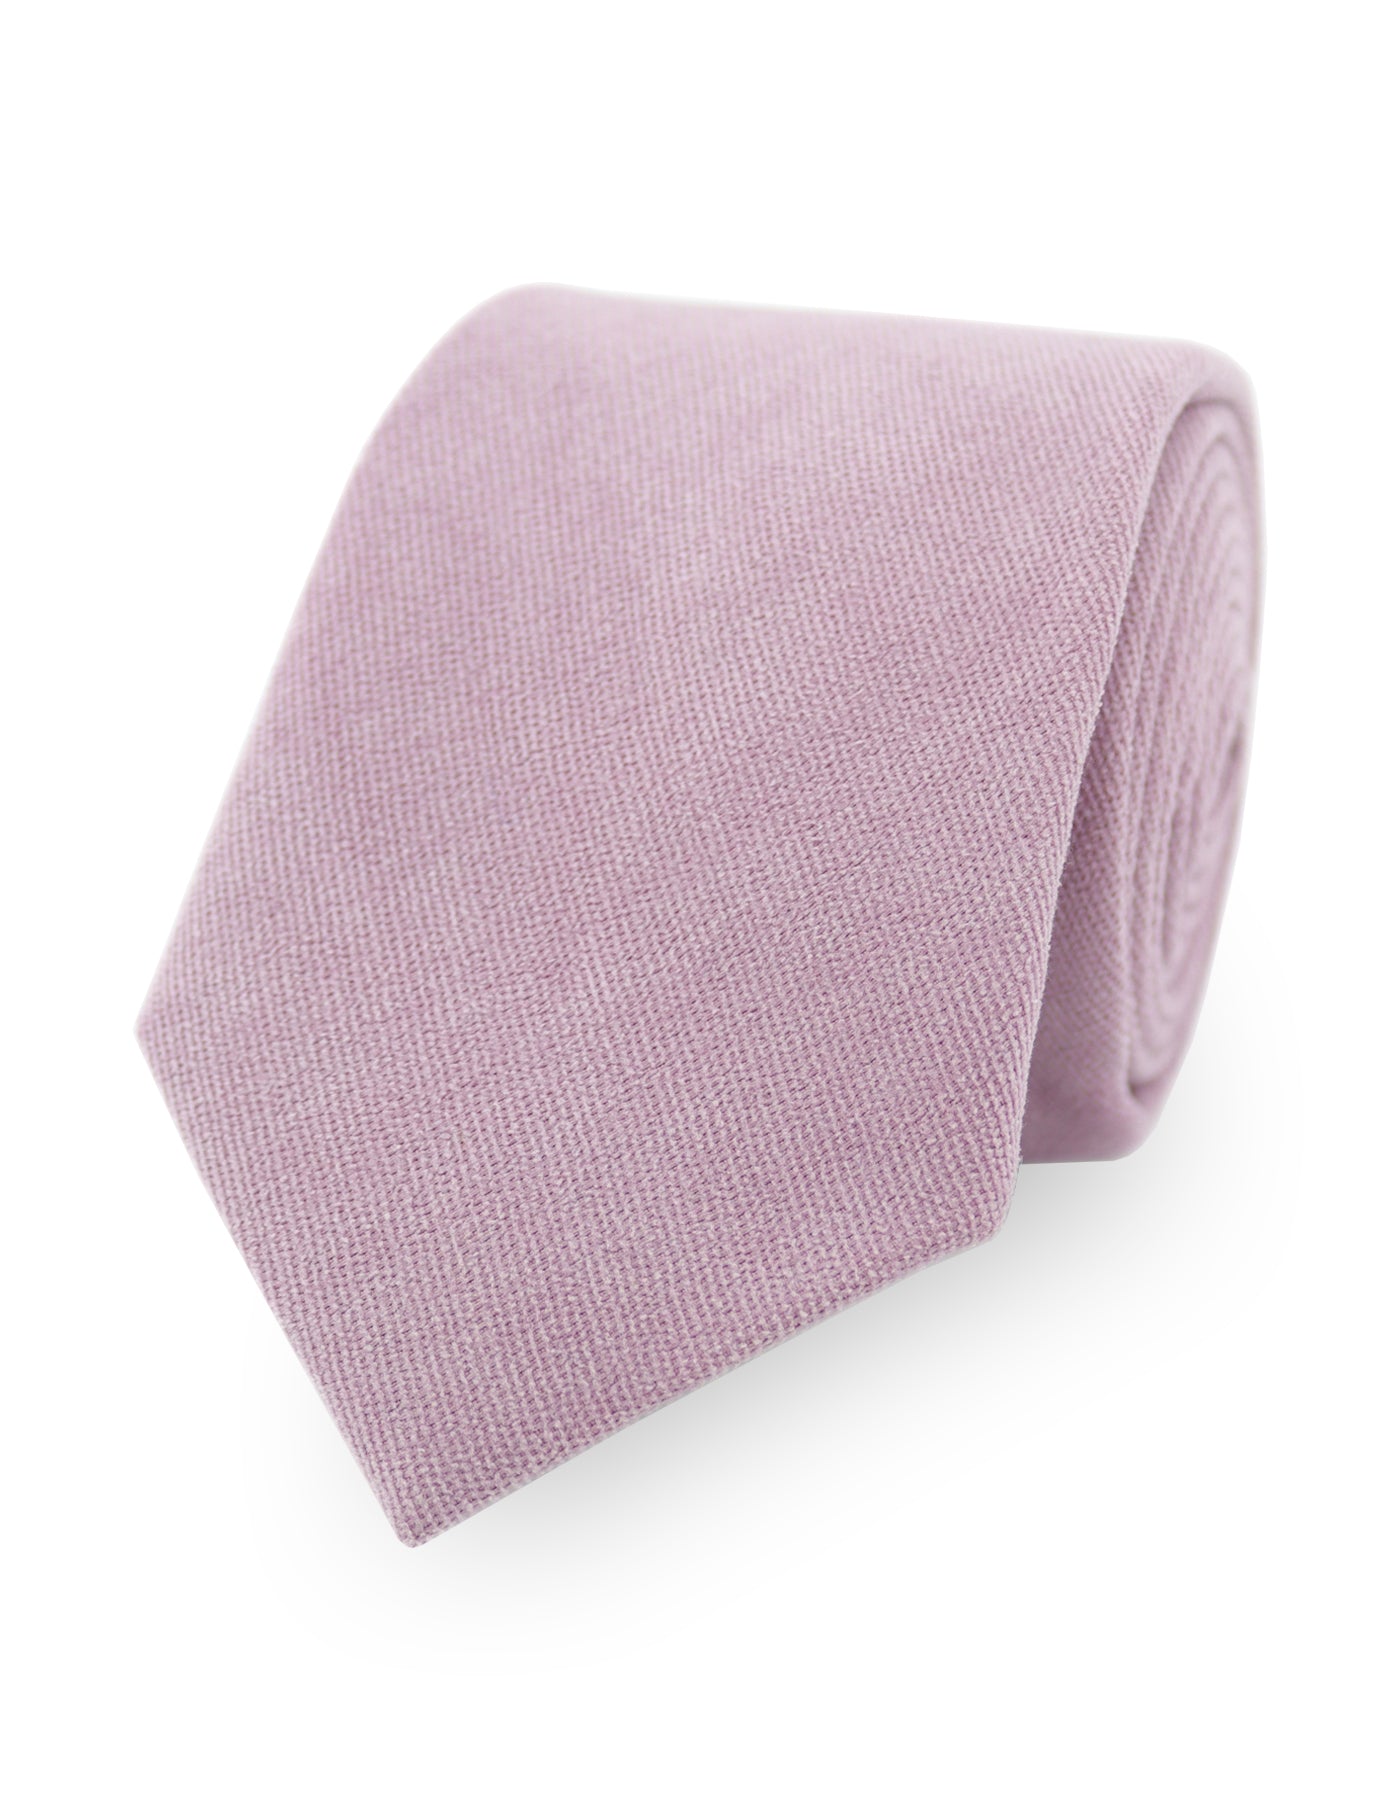 100% Brushed Cotton Suede Pocket Square - Purple